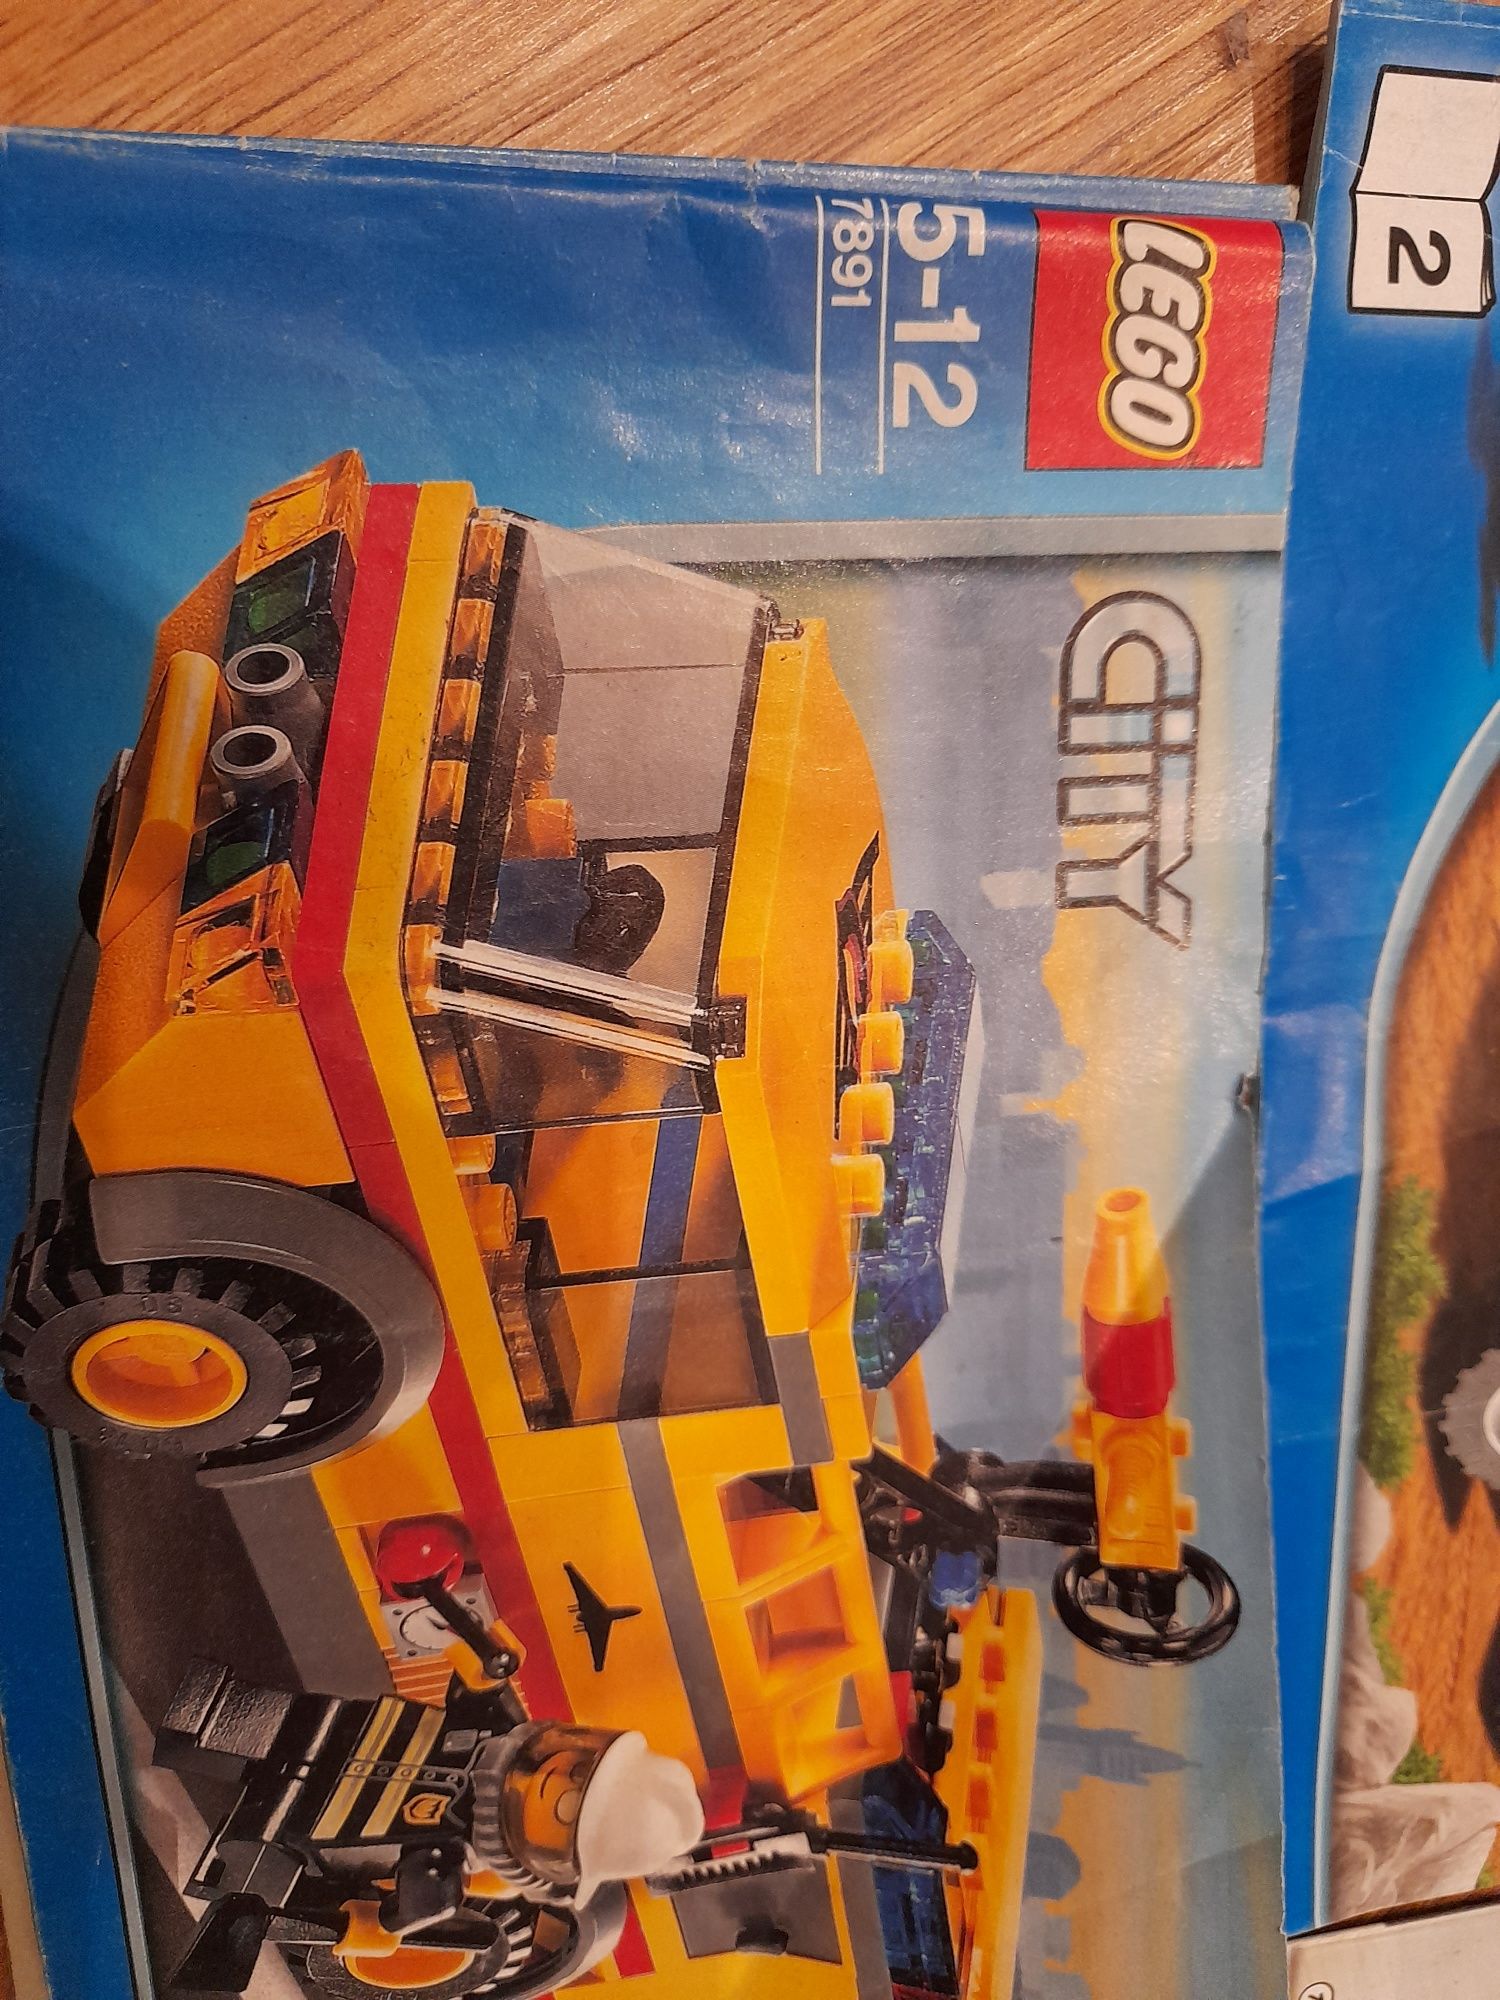 Lego city duży zestaw+ 60144